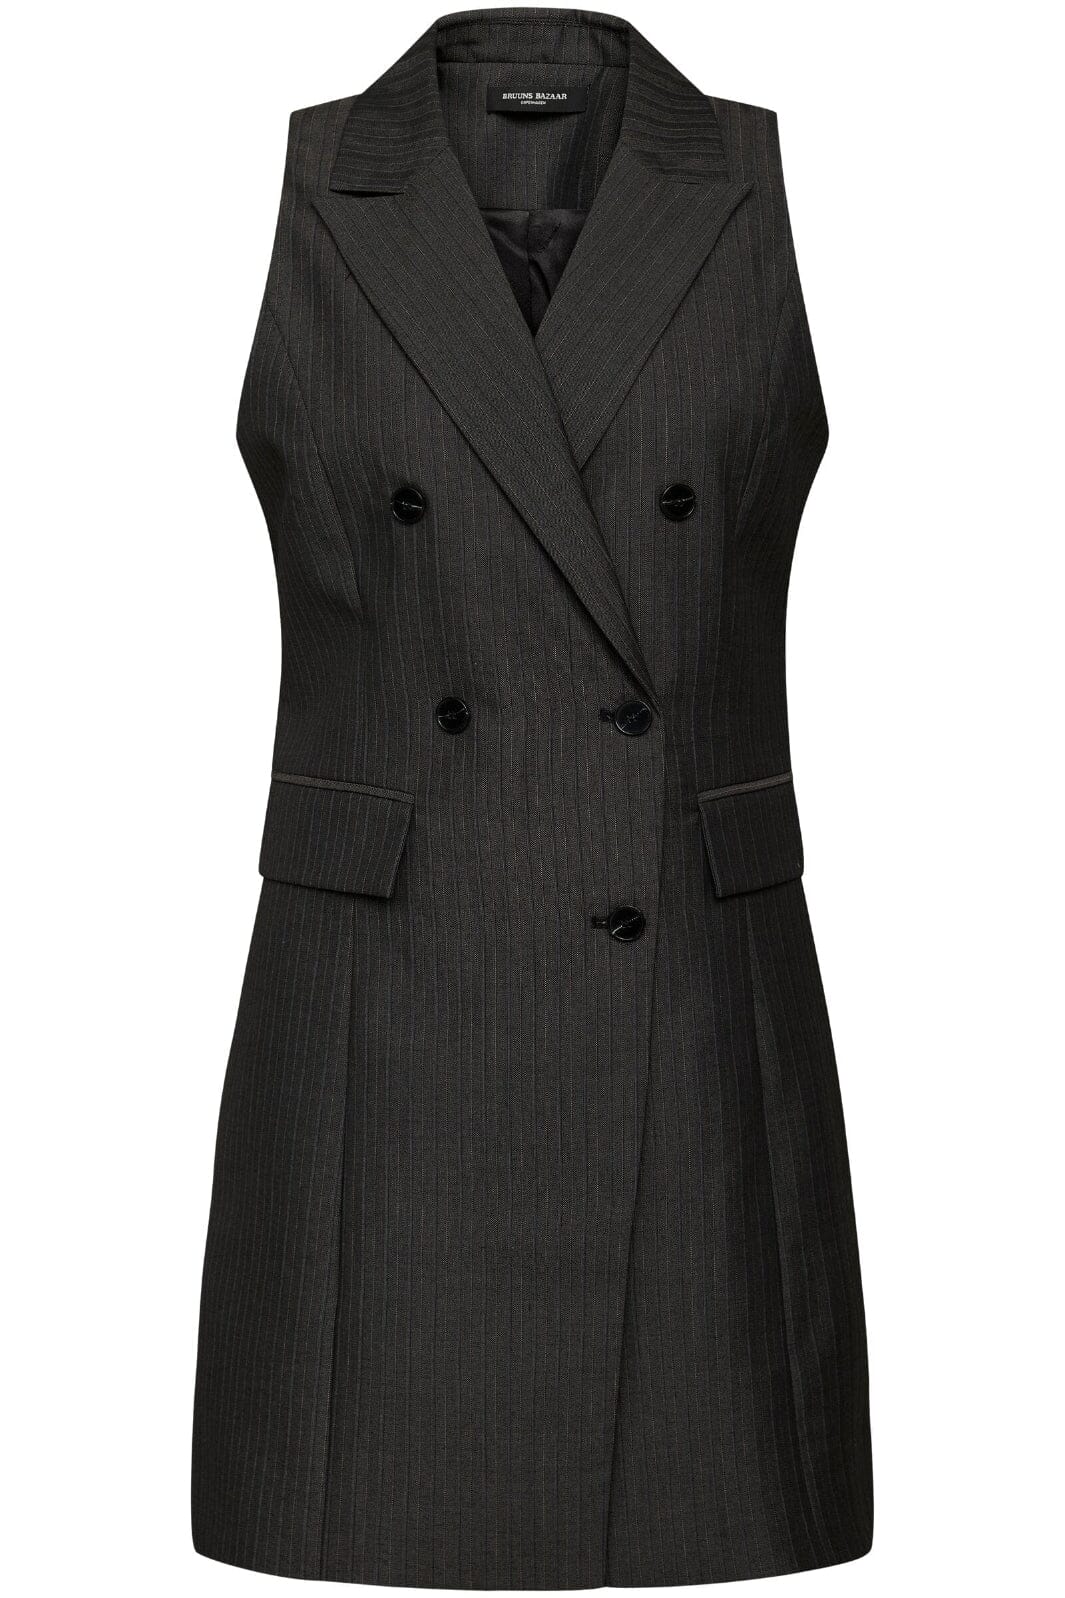 Bruuns Bazaar - Need Lian dress - Grey pin stripe Kjoler 